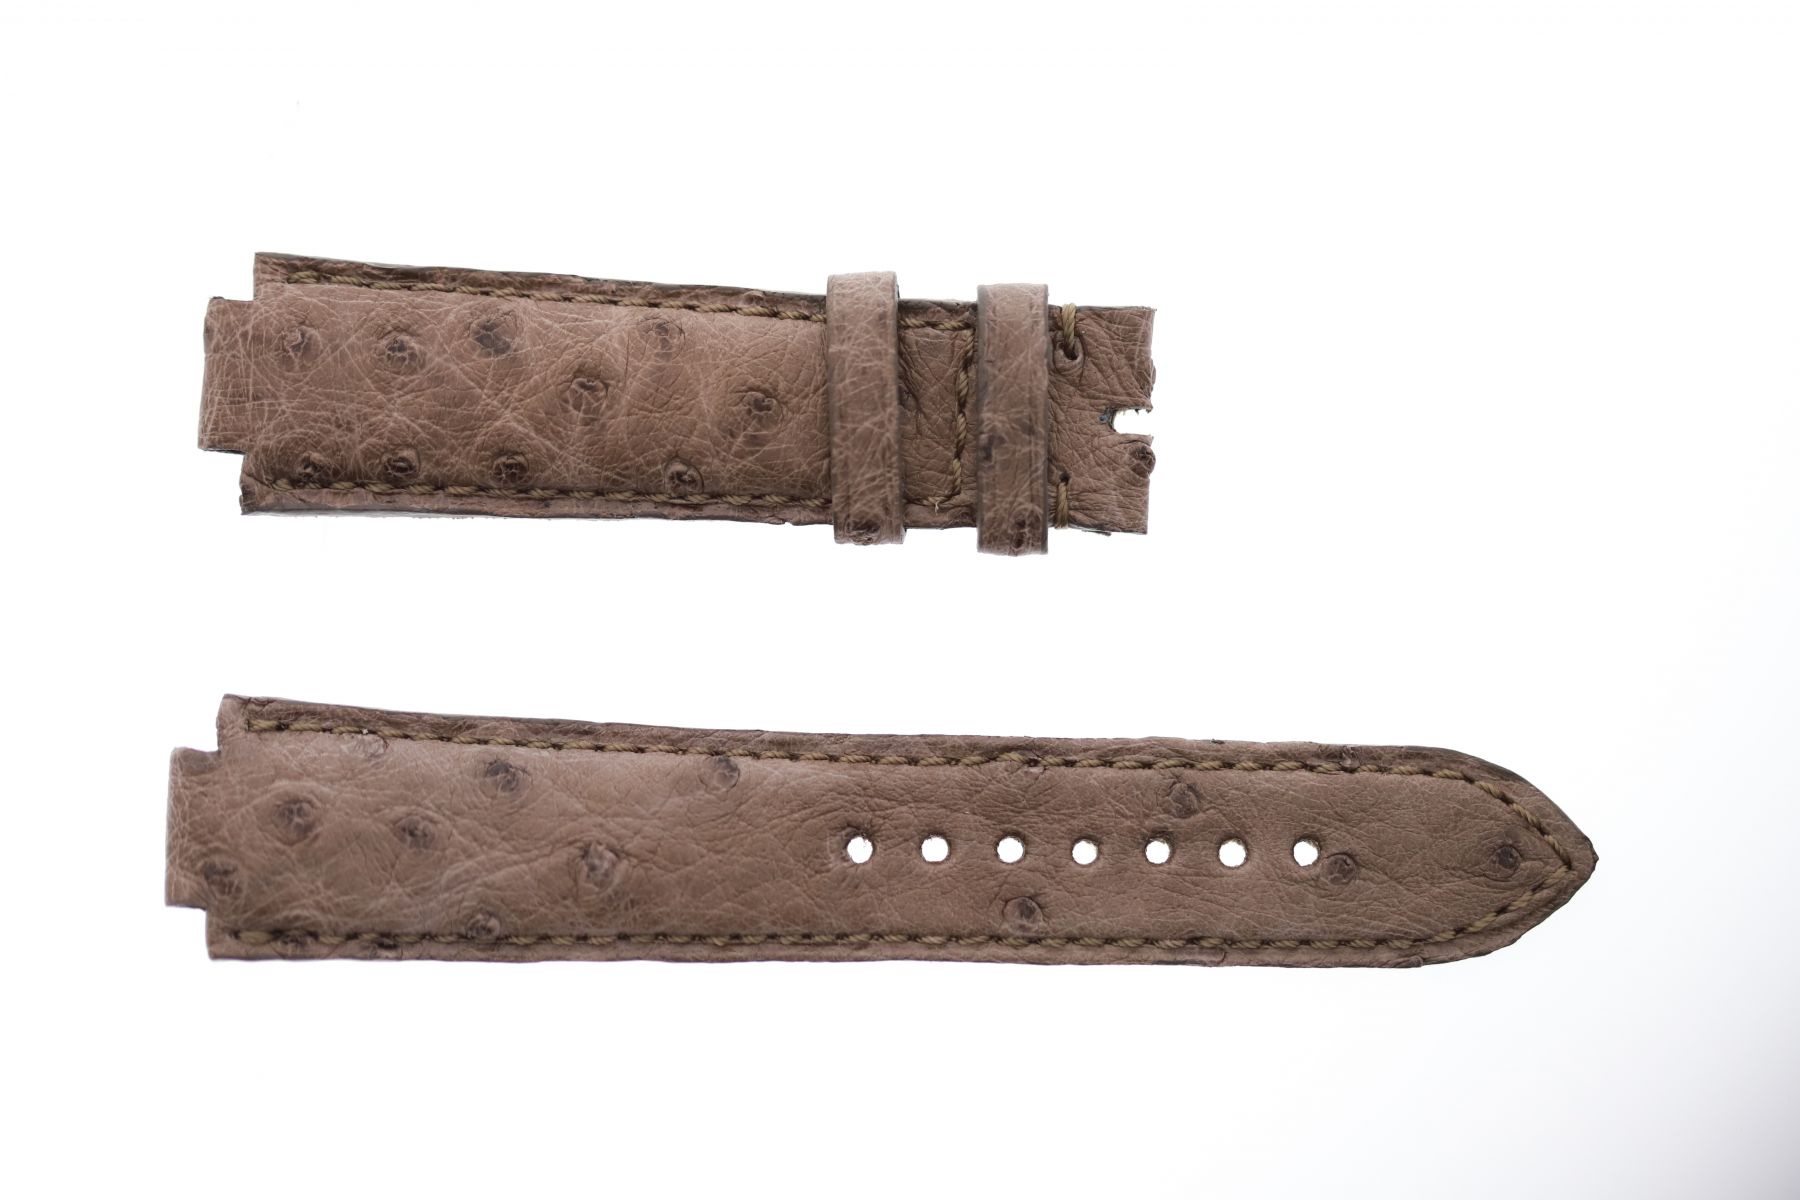 Louis Vuitton Leather Wide Buckle Strap Beige